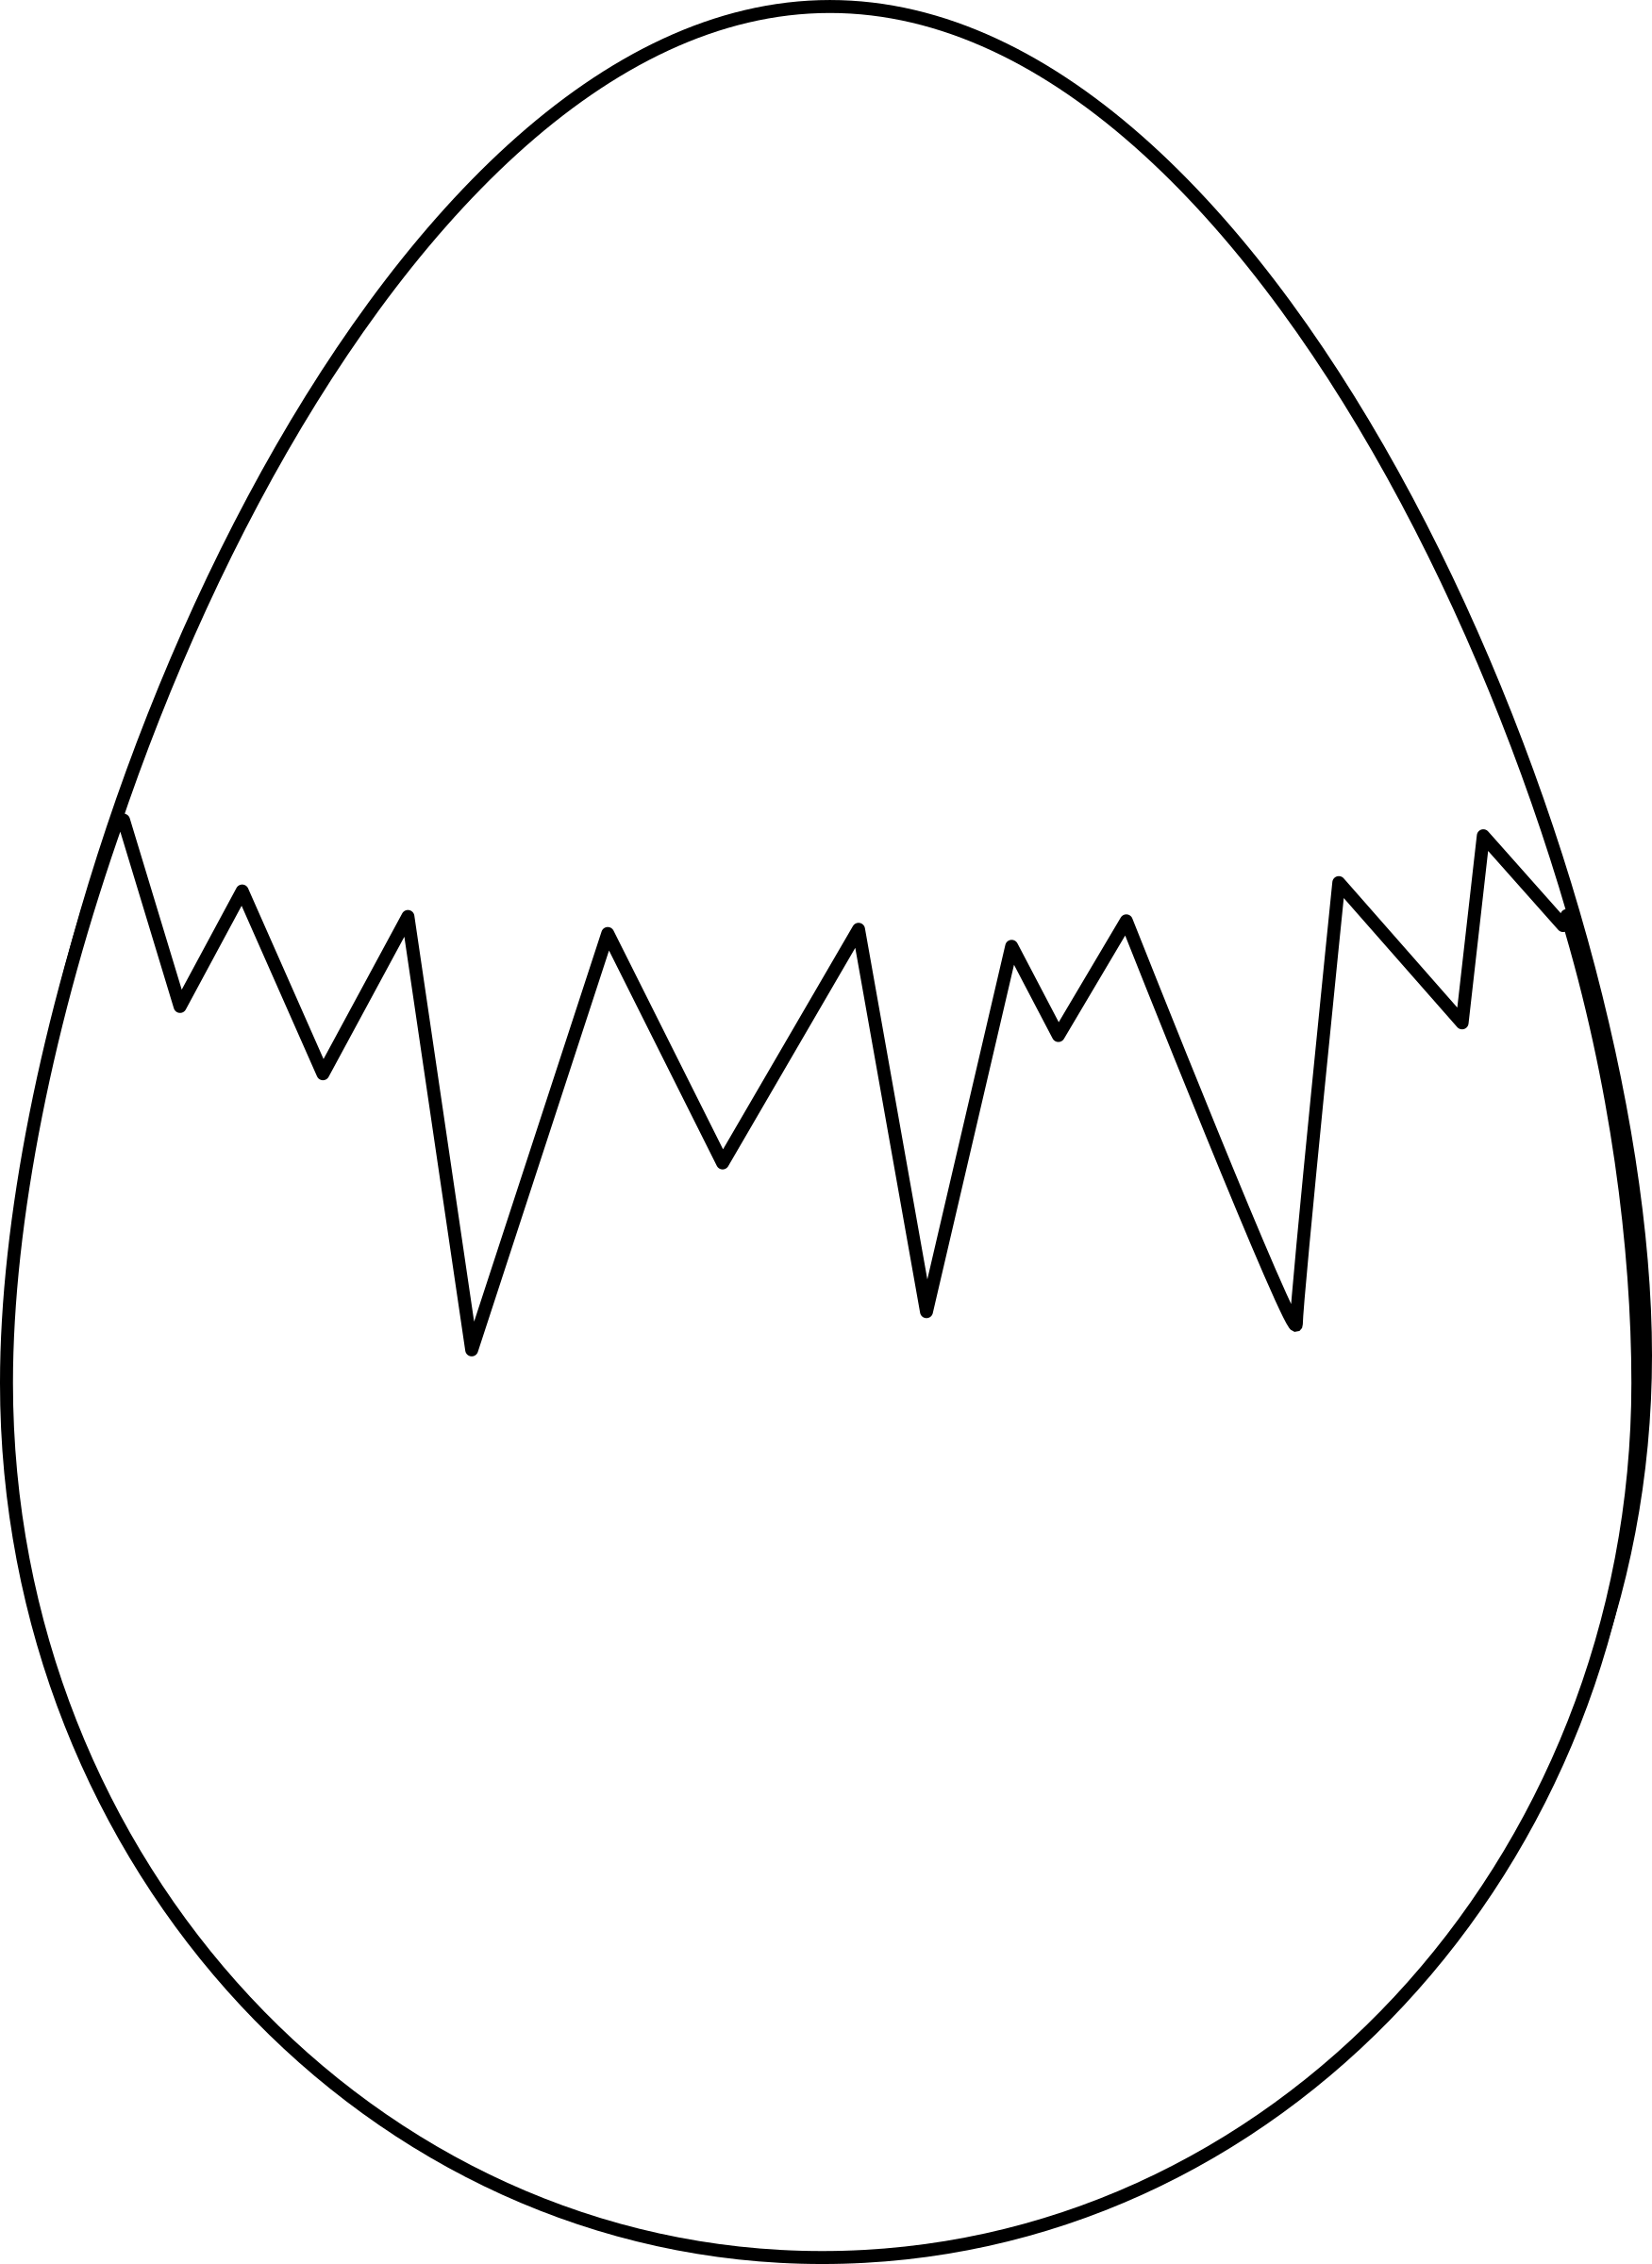 Яйцо трафарет для вырезания. Яйцо раскраска. Яйцо раскраска для детей. Раскраски пасочных яиц. Пасхальное яйцо раскраска.